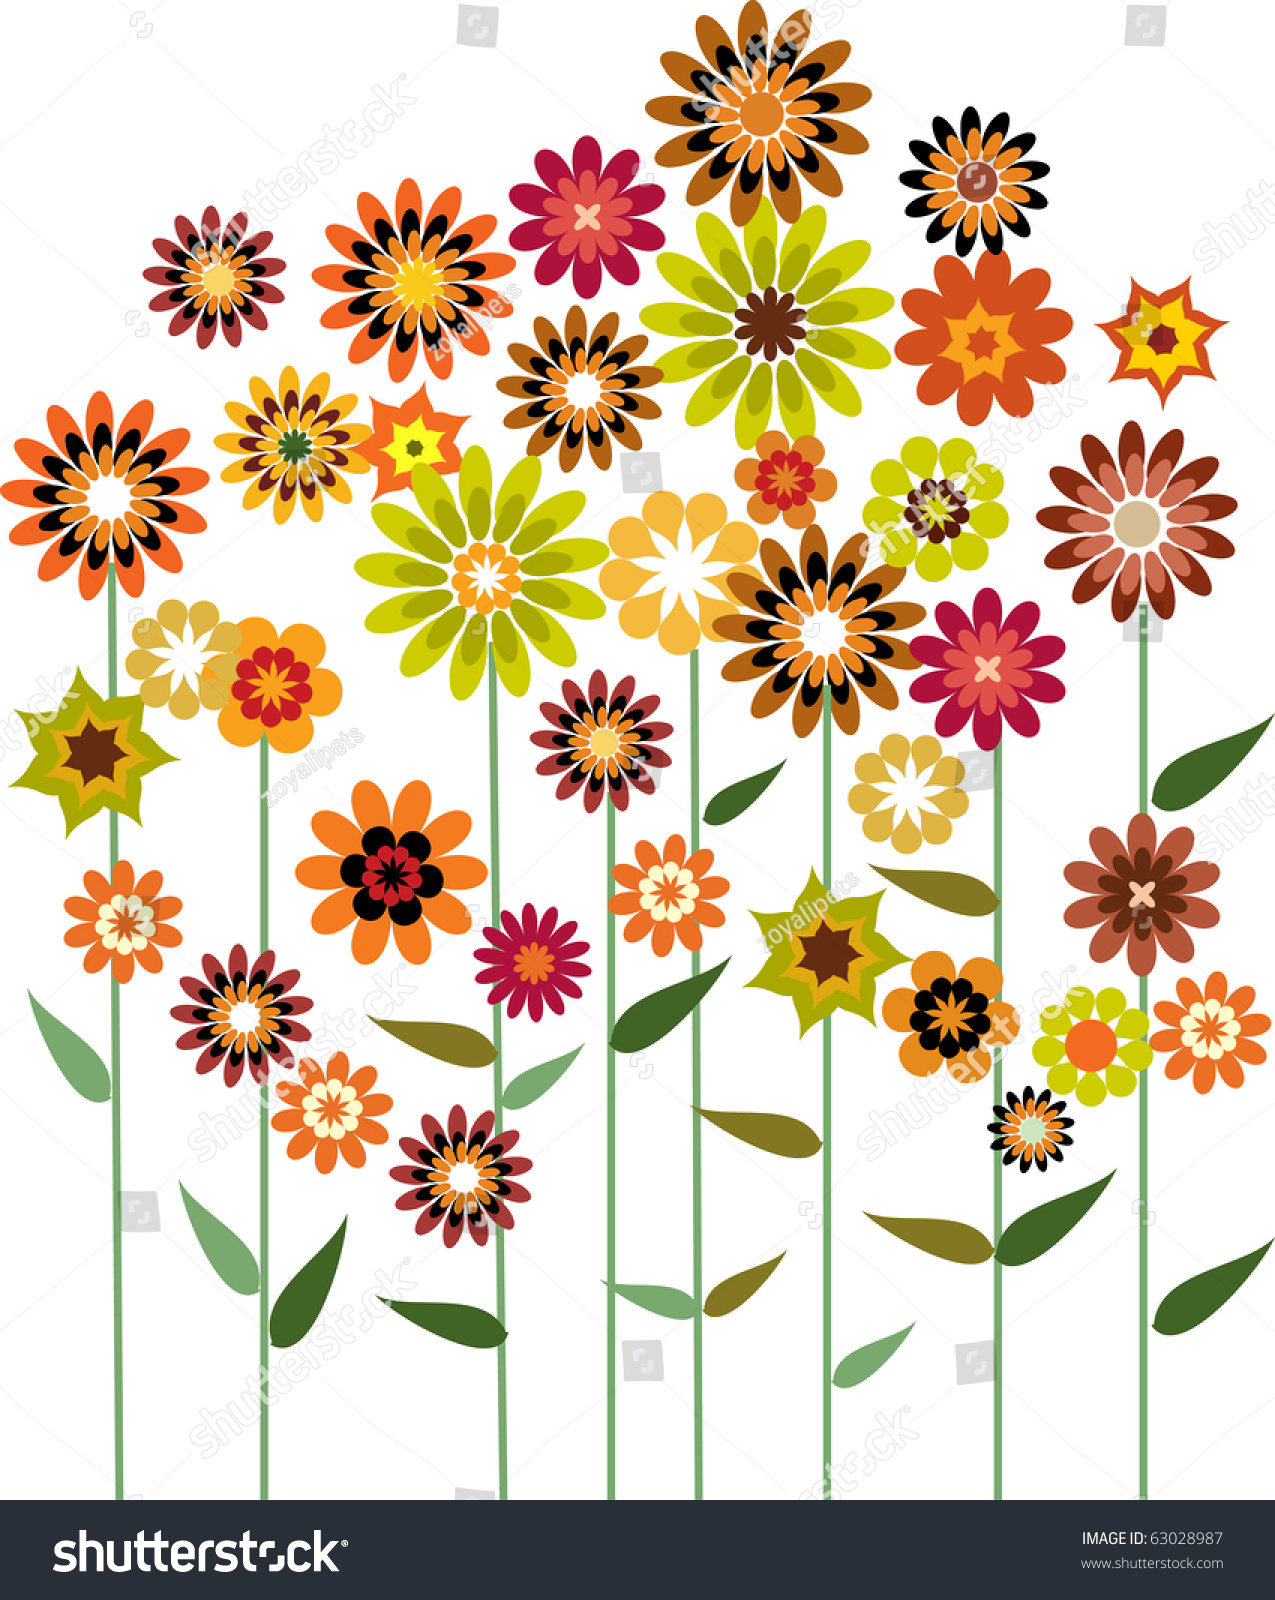 Autumn Flower Garden, Vector Illustration - 63028987 : Shutterstock